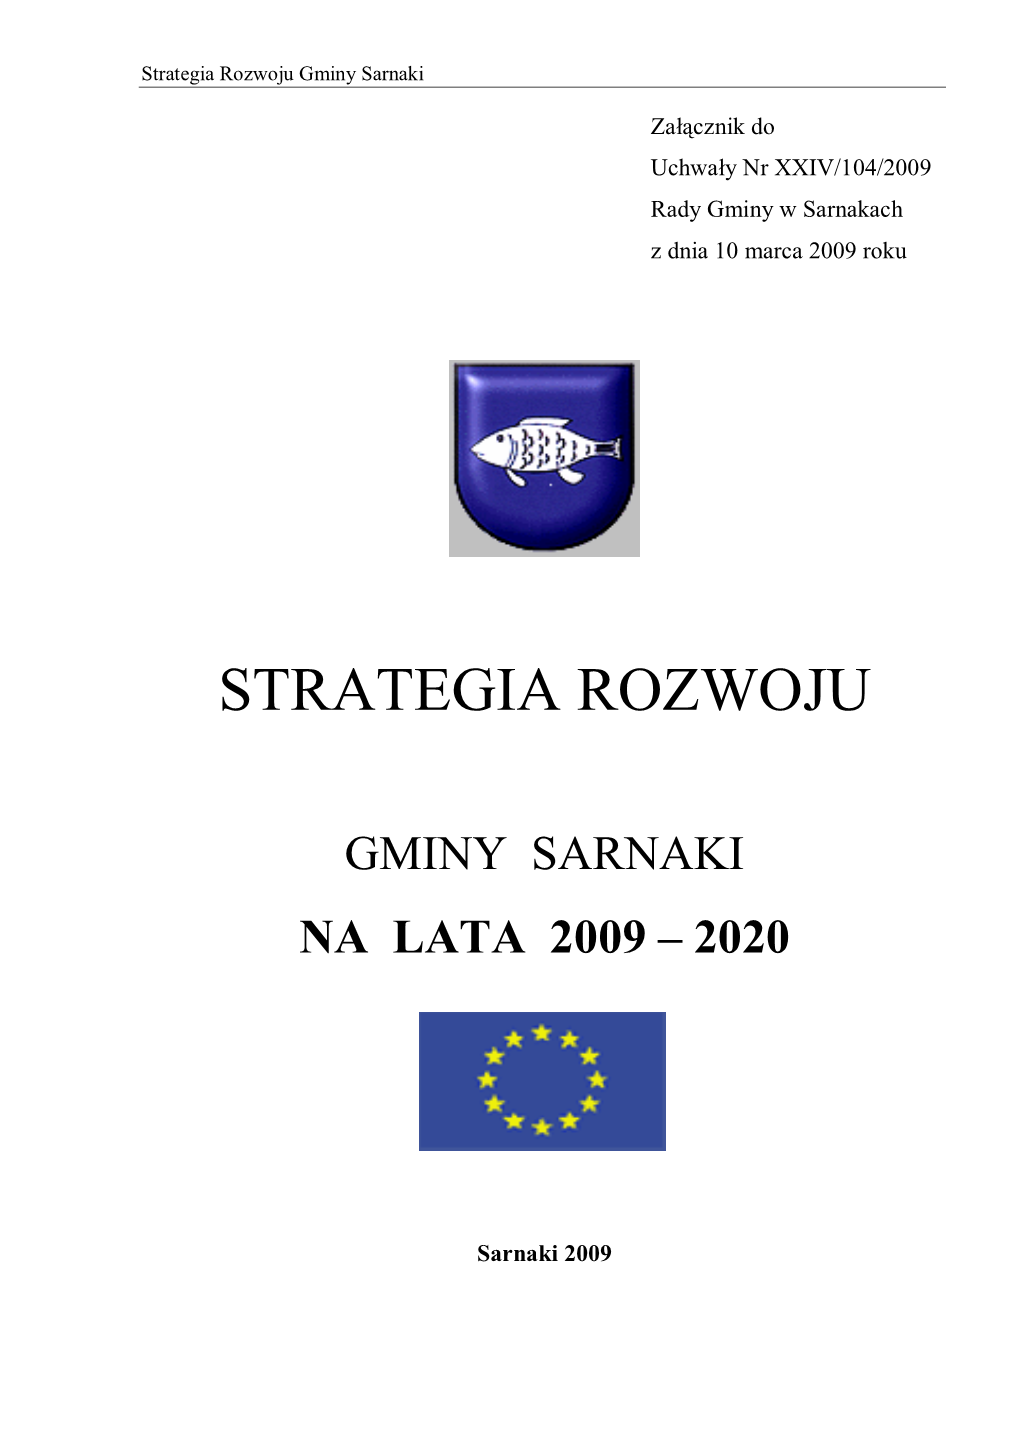 Strategia Rozwoju Gminy Sarnaki Na Lata 2009-2020